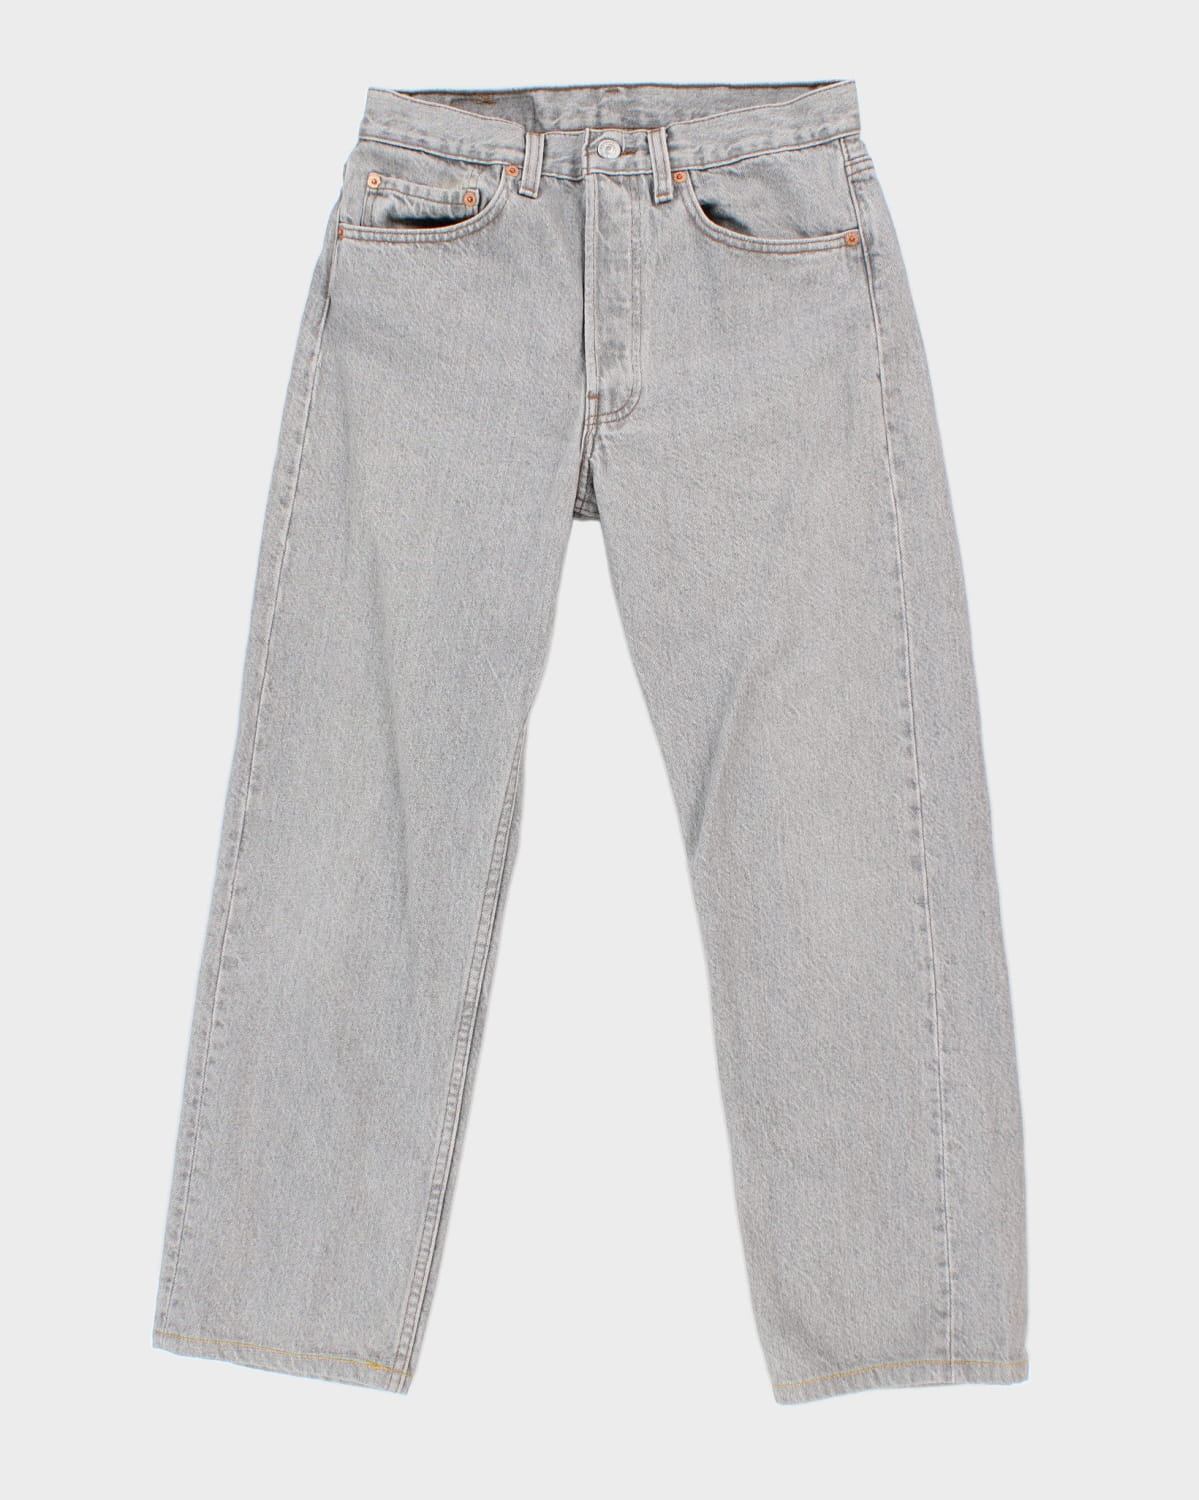 Grey 501s Levi's Jeans - 31